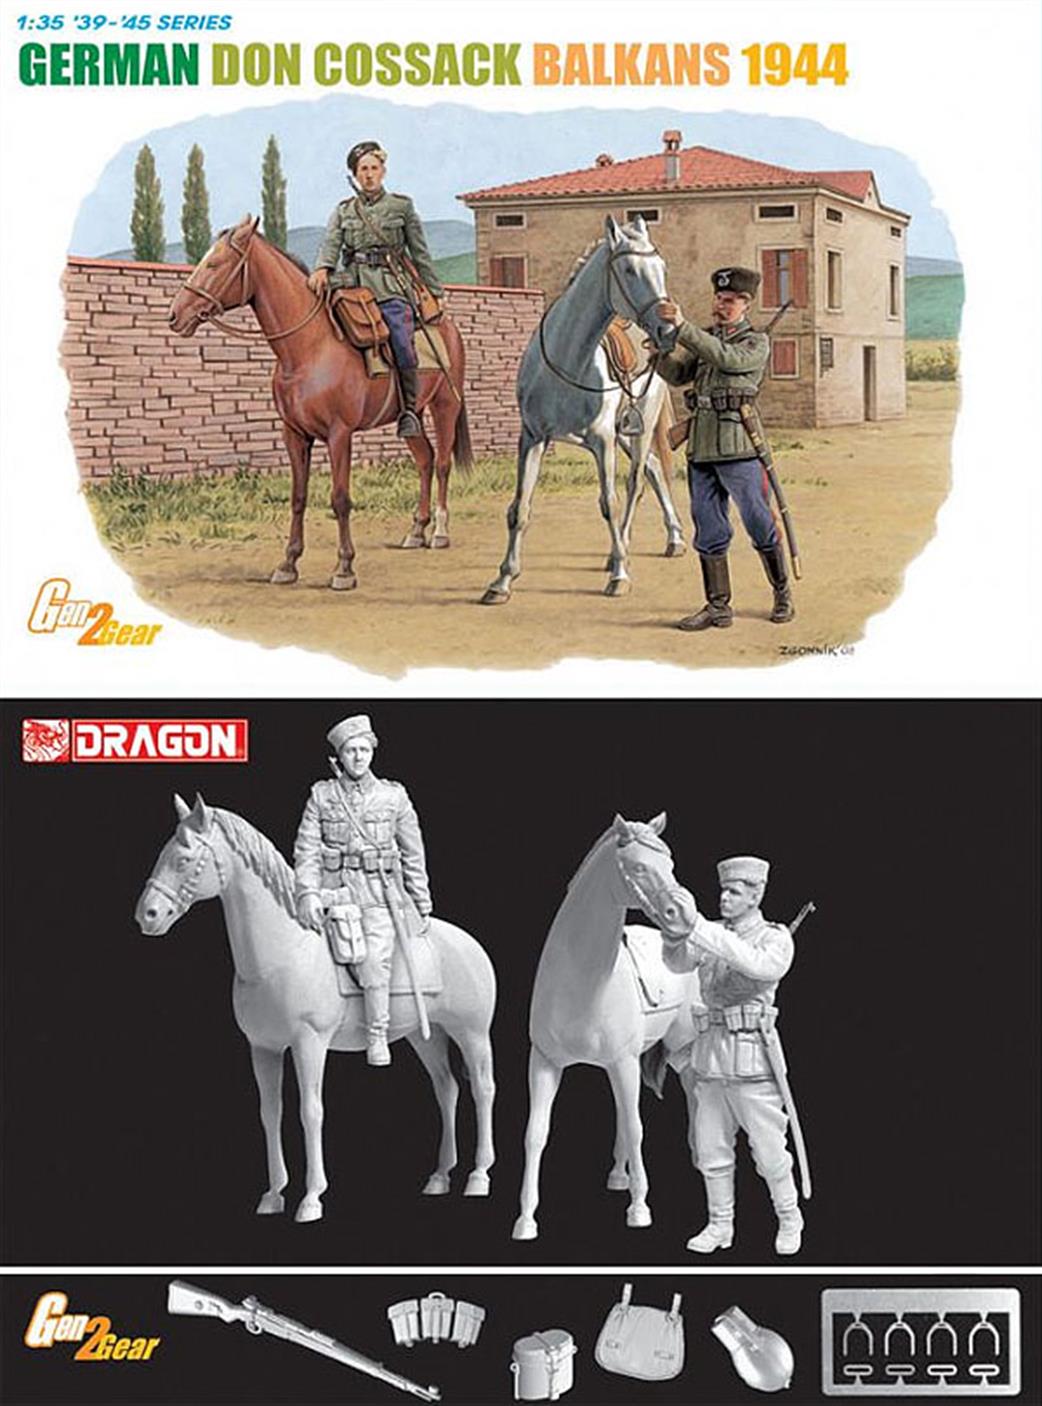 Dragon Models 1/35 6588 German Don Cossack Balkans 1944